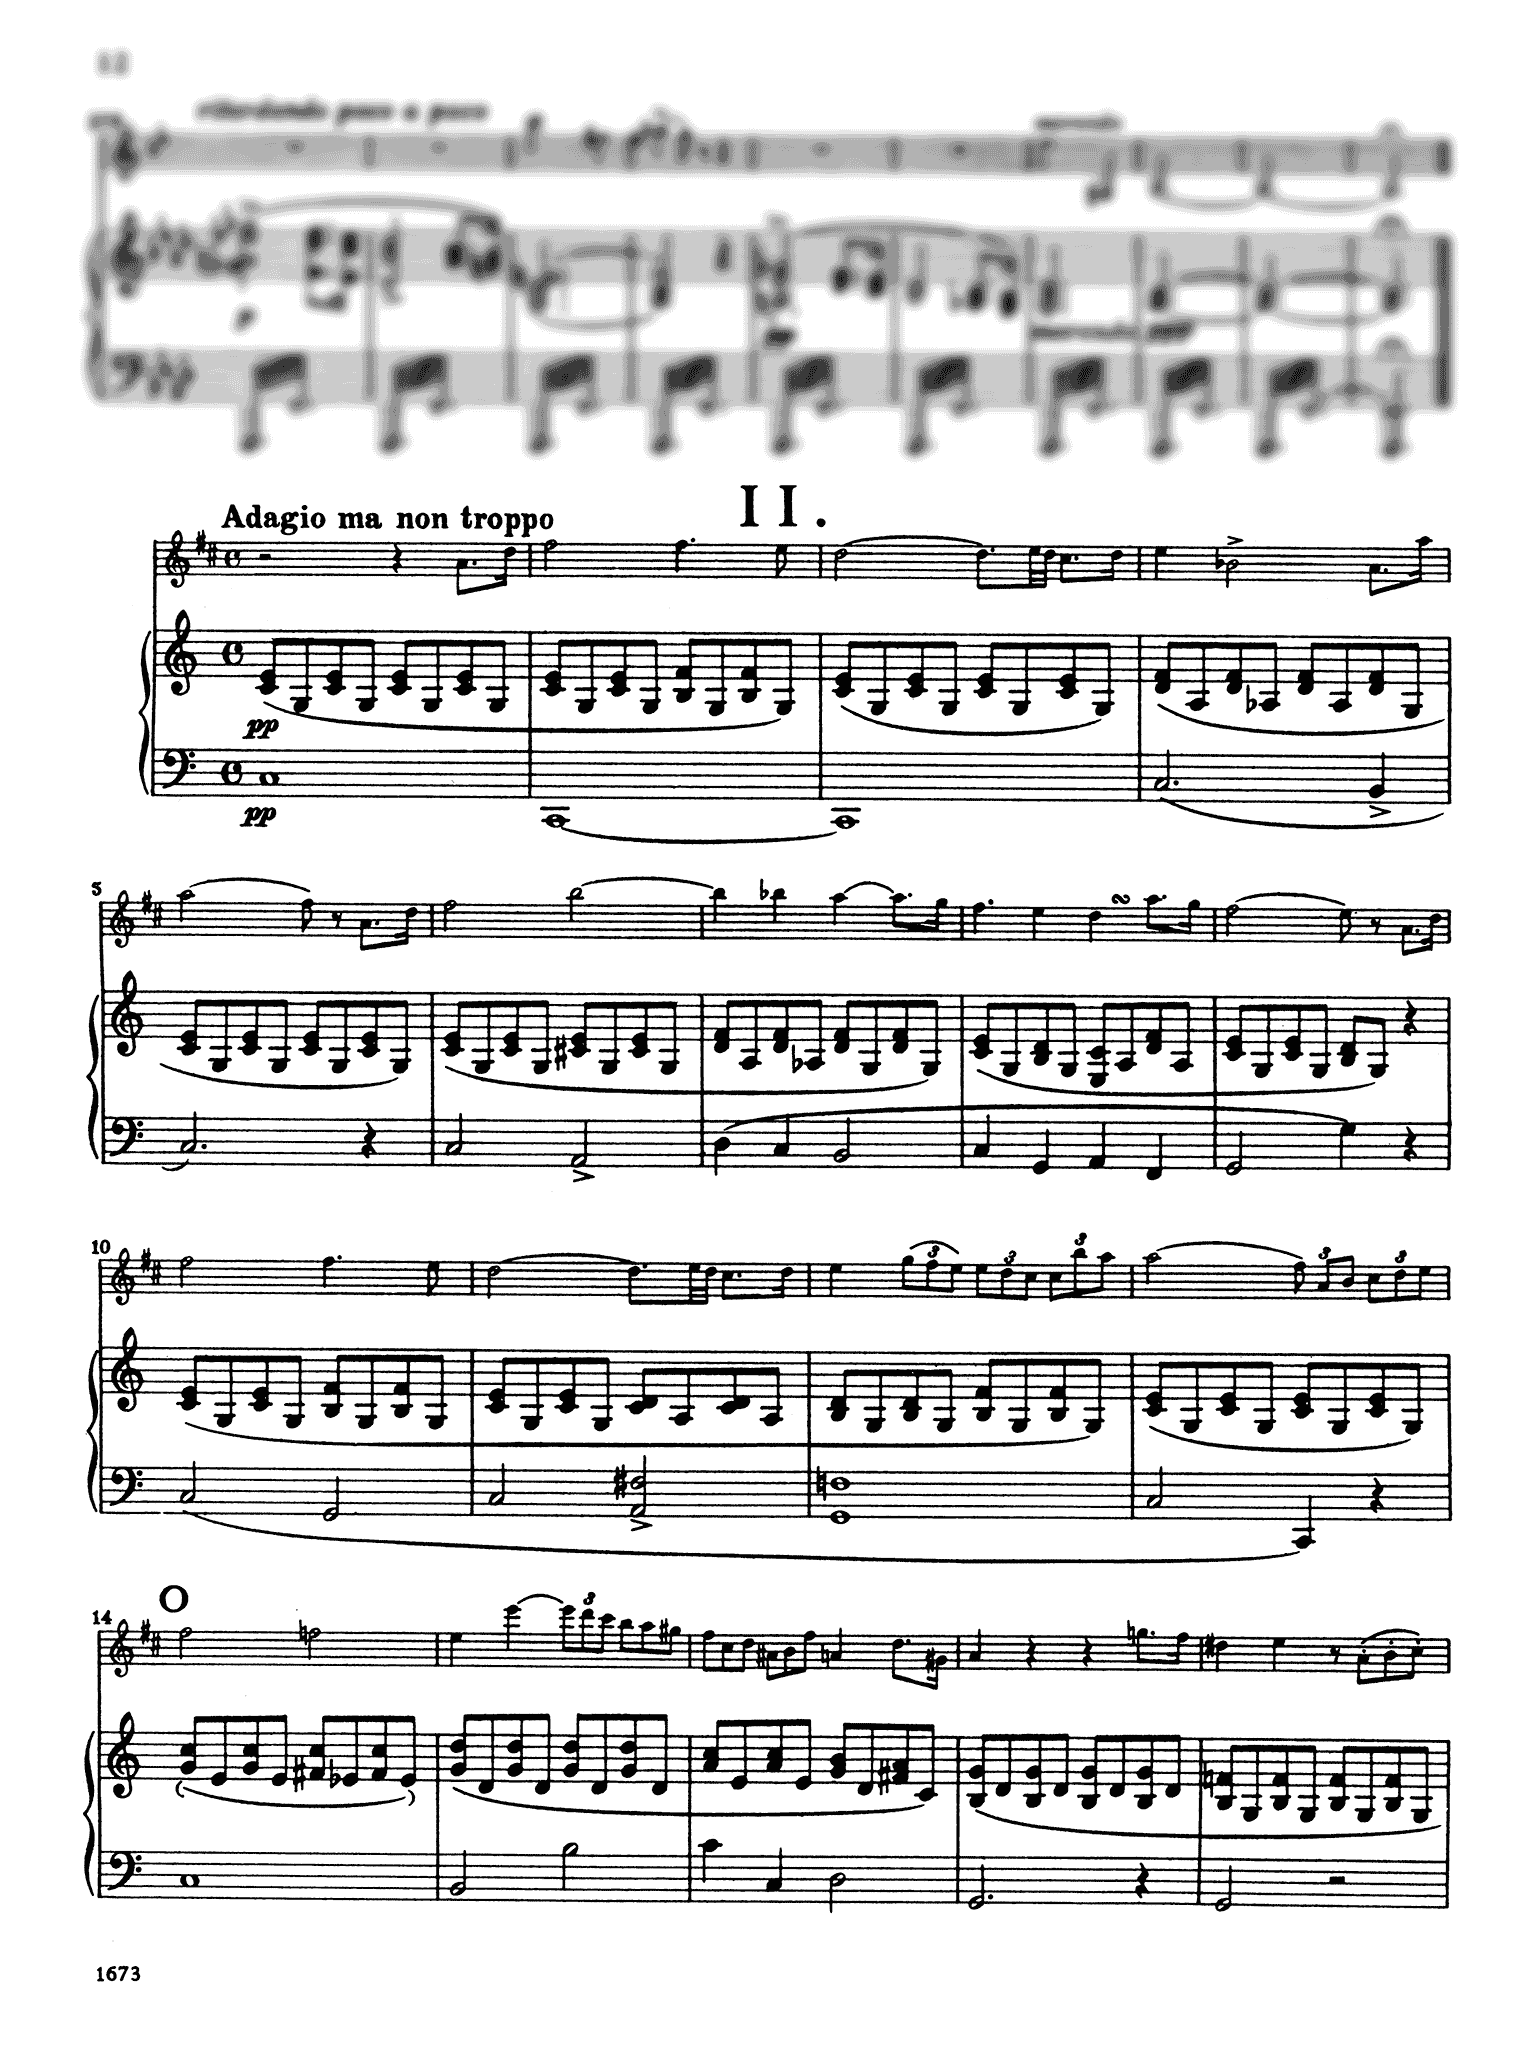 Clarinet Concerto No. 1 in F Minor, Op. 73 - Movement 2